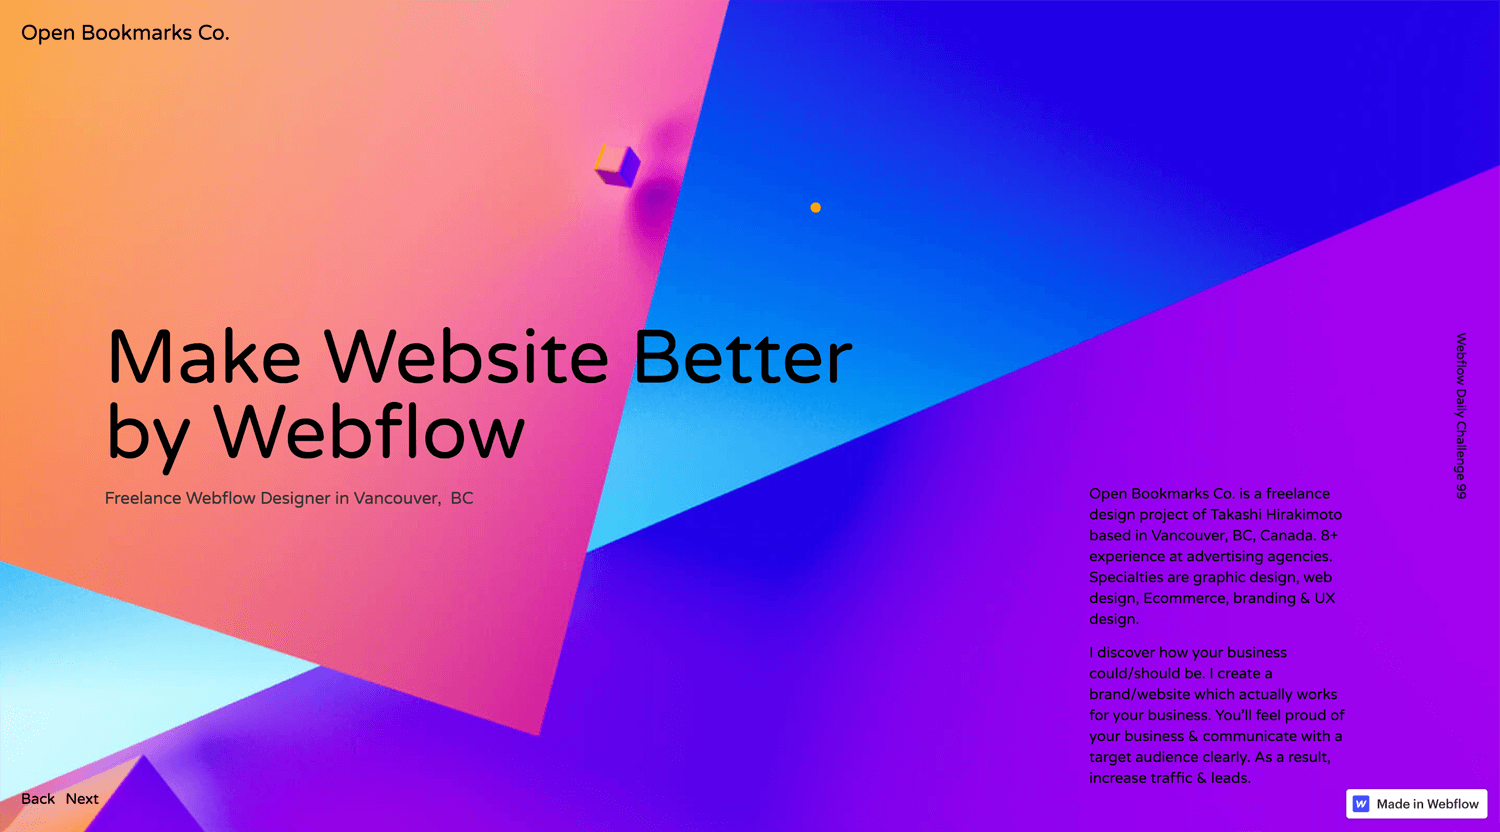 Custom Cursors Explained - Web Bae Code Boost for Webflow